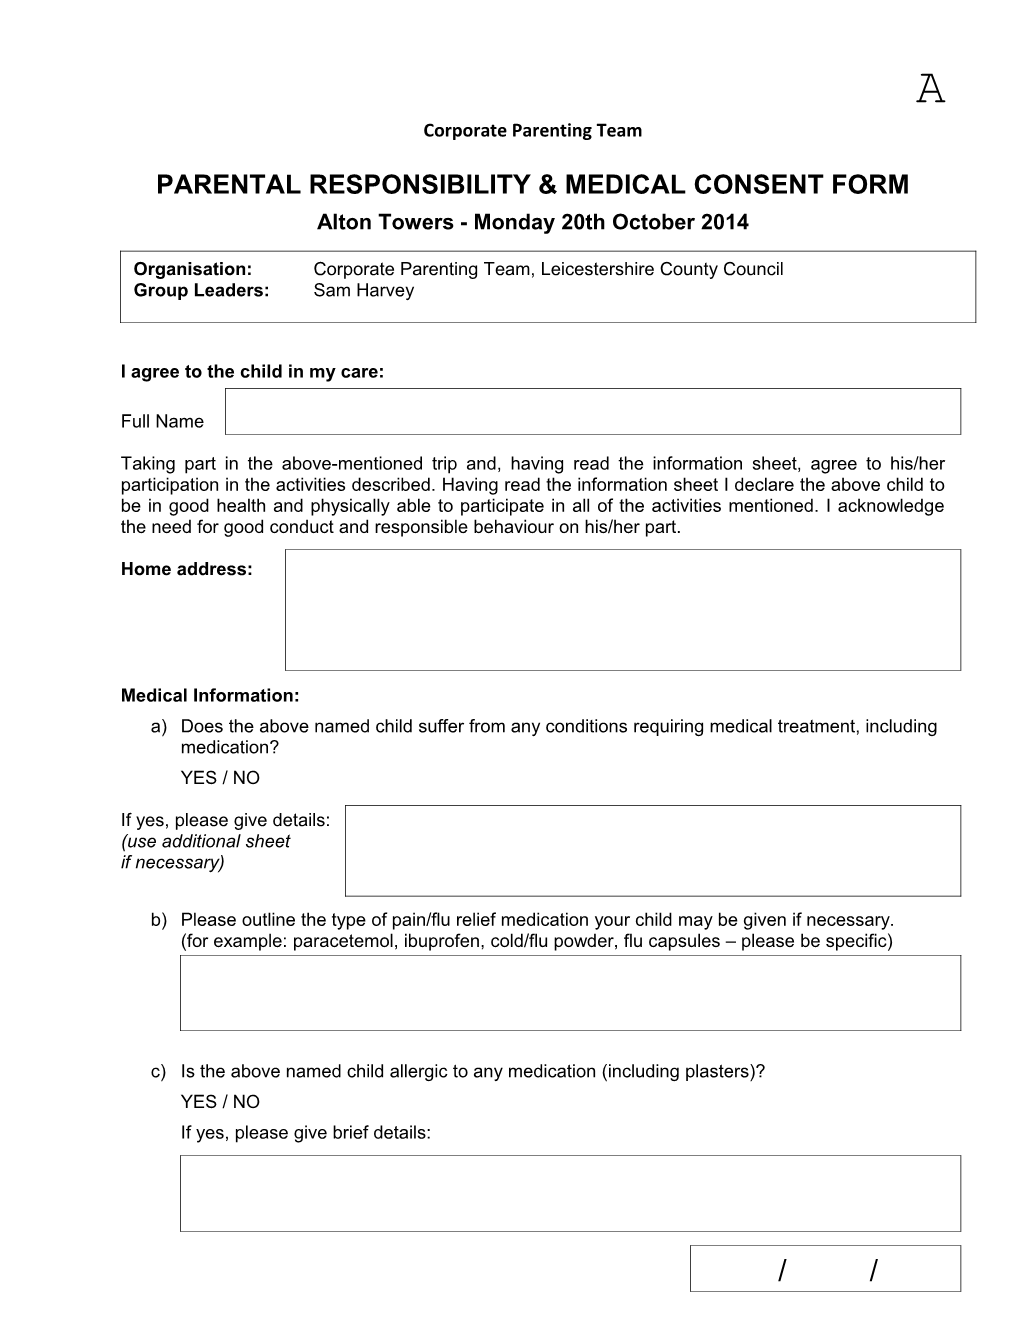 Parental Responsibility & Medical Consent Form